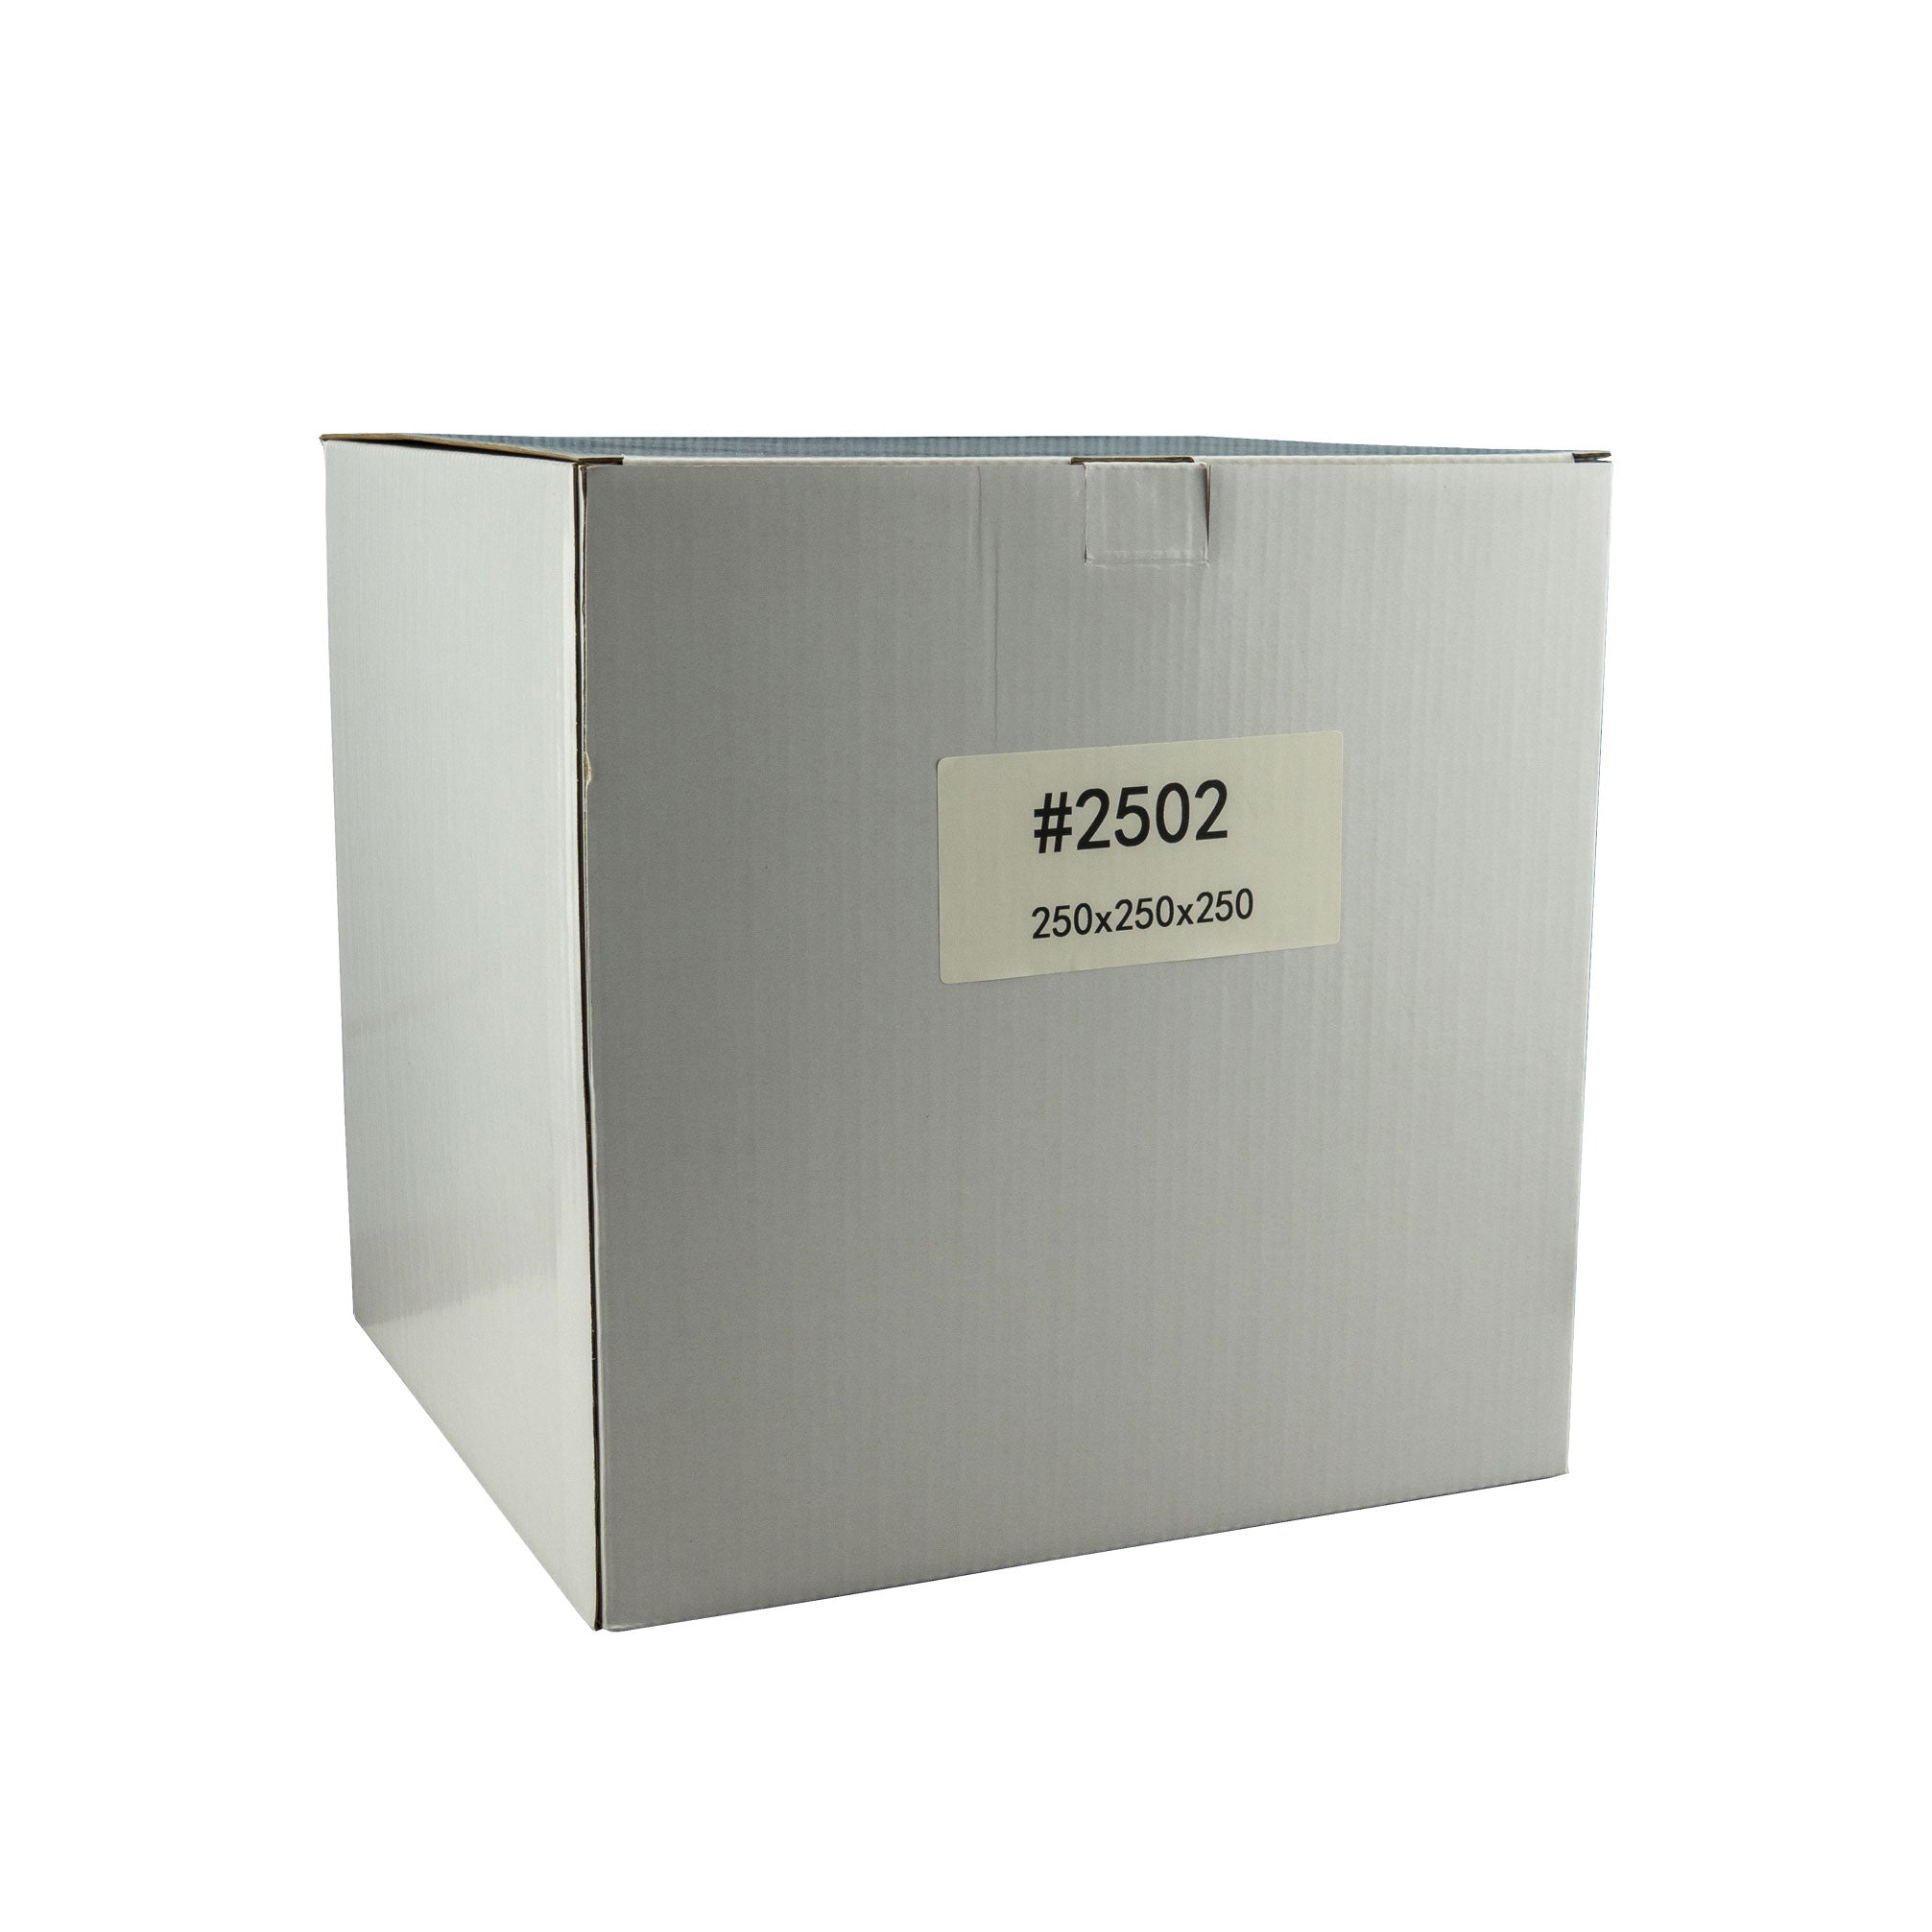 250mm x 250mm x 250mm White Carton Cardboard Shipping Box (#2502)